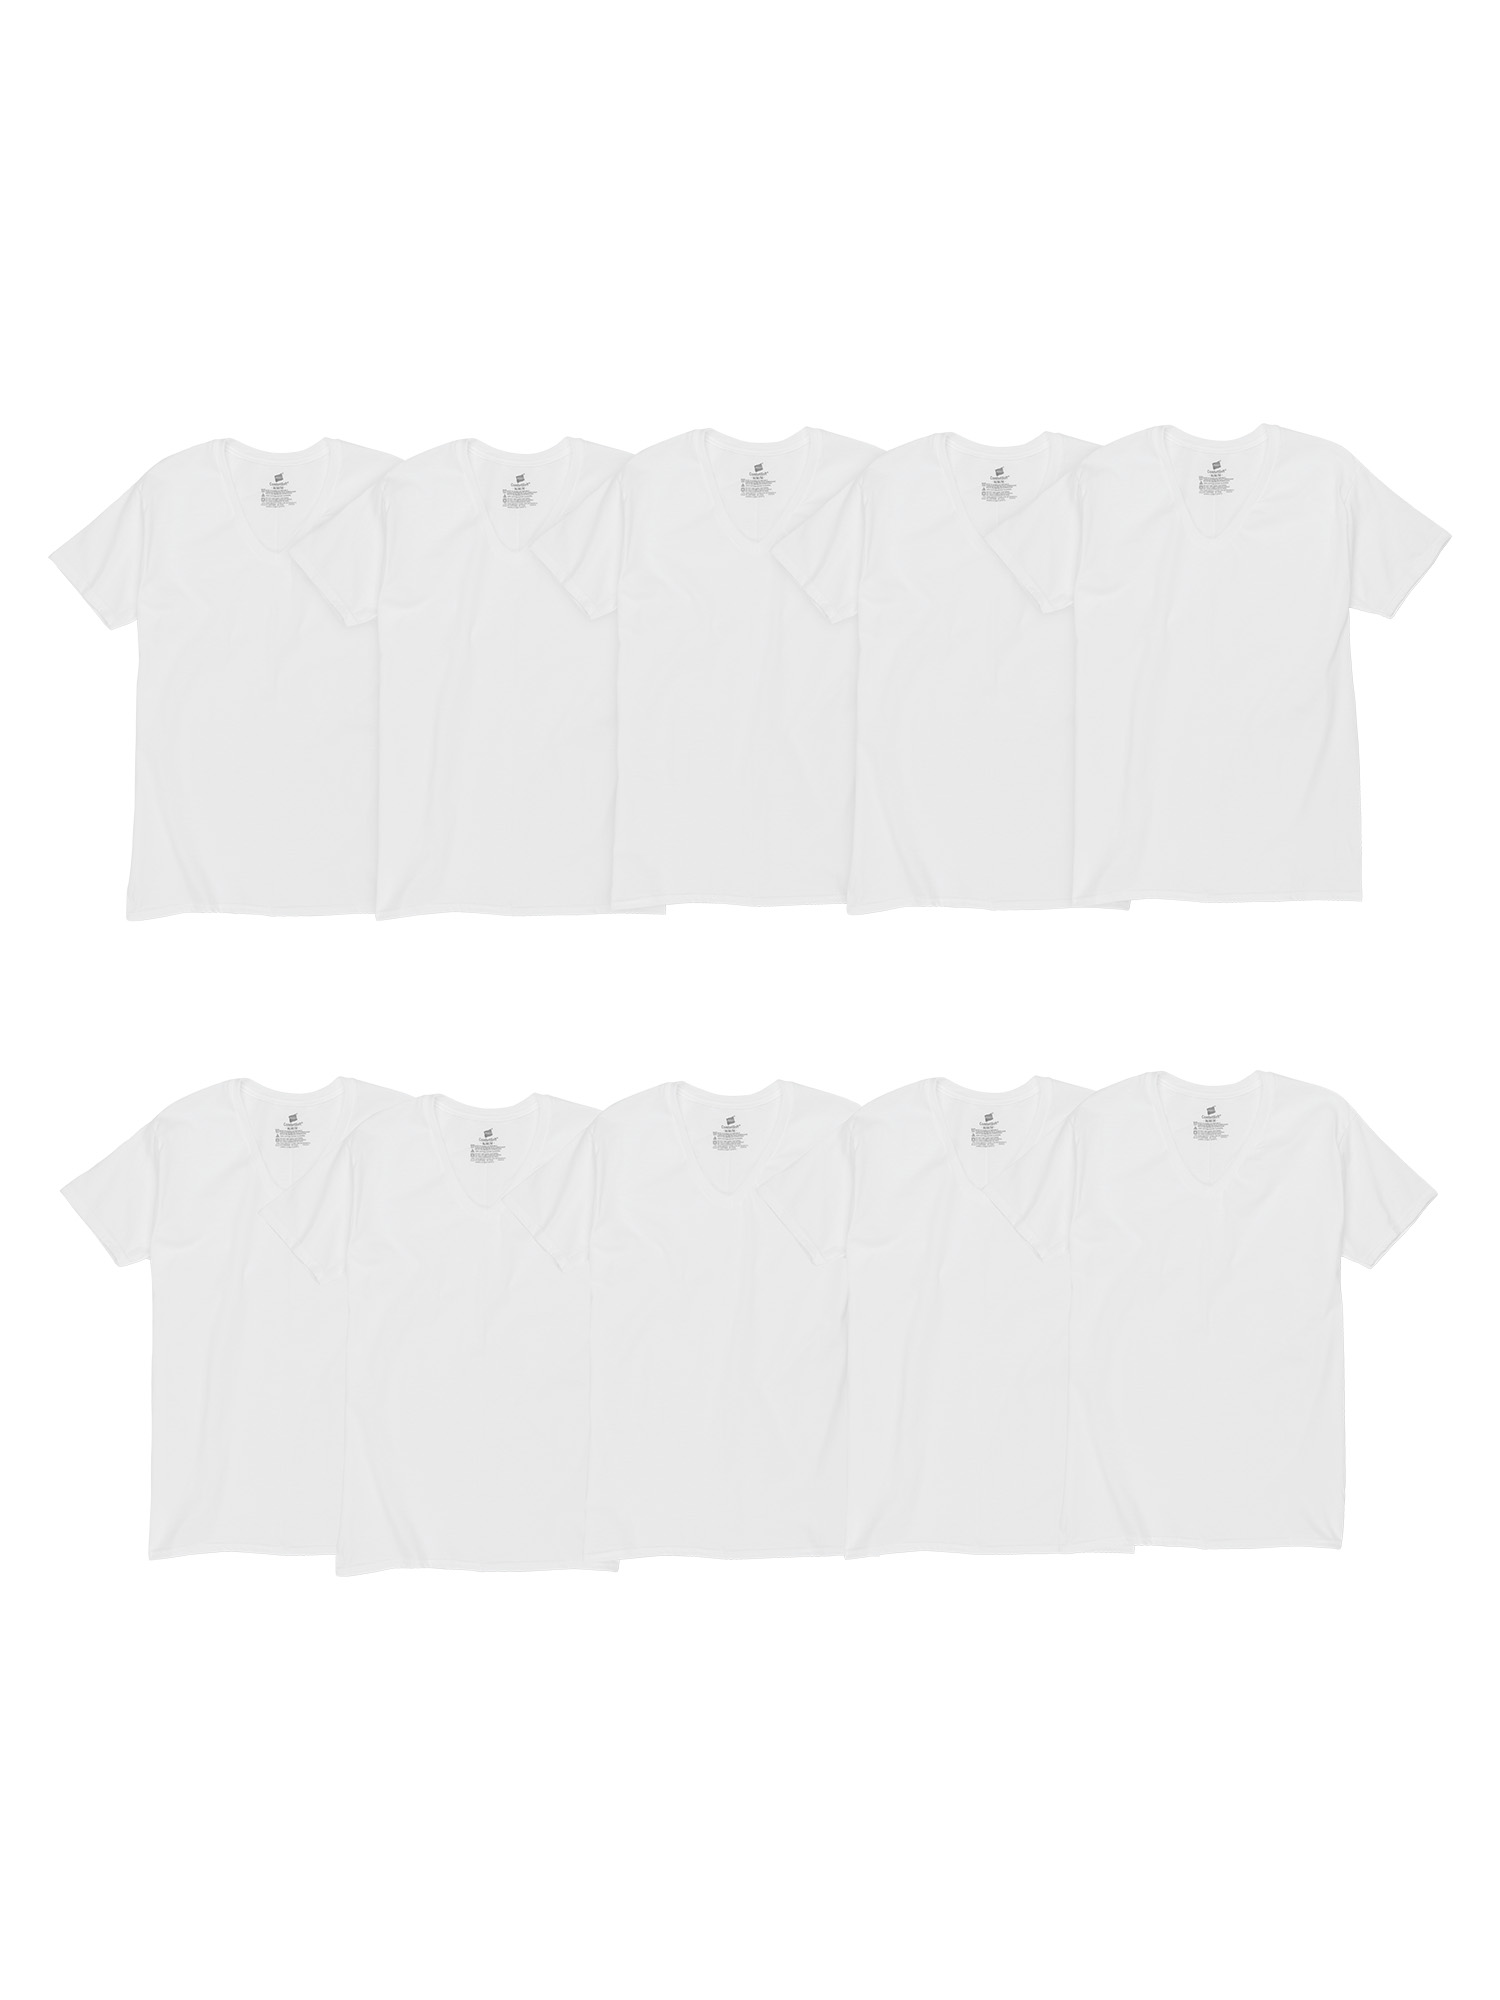 Hanes Men's Super Value Pack White V-Neck Undershirts, 10 Pack - image 1 of 9